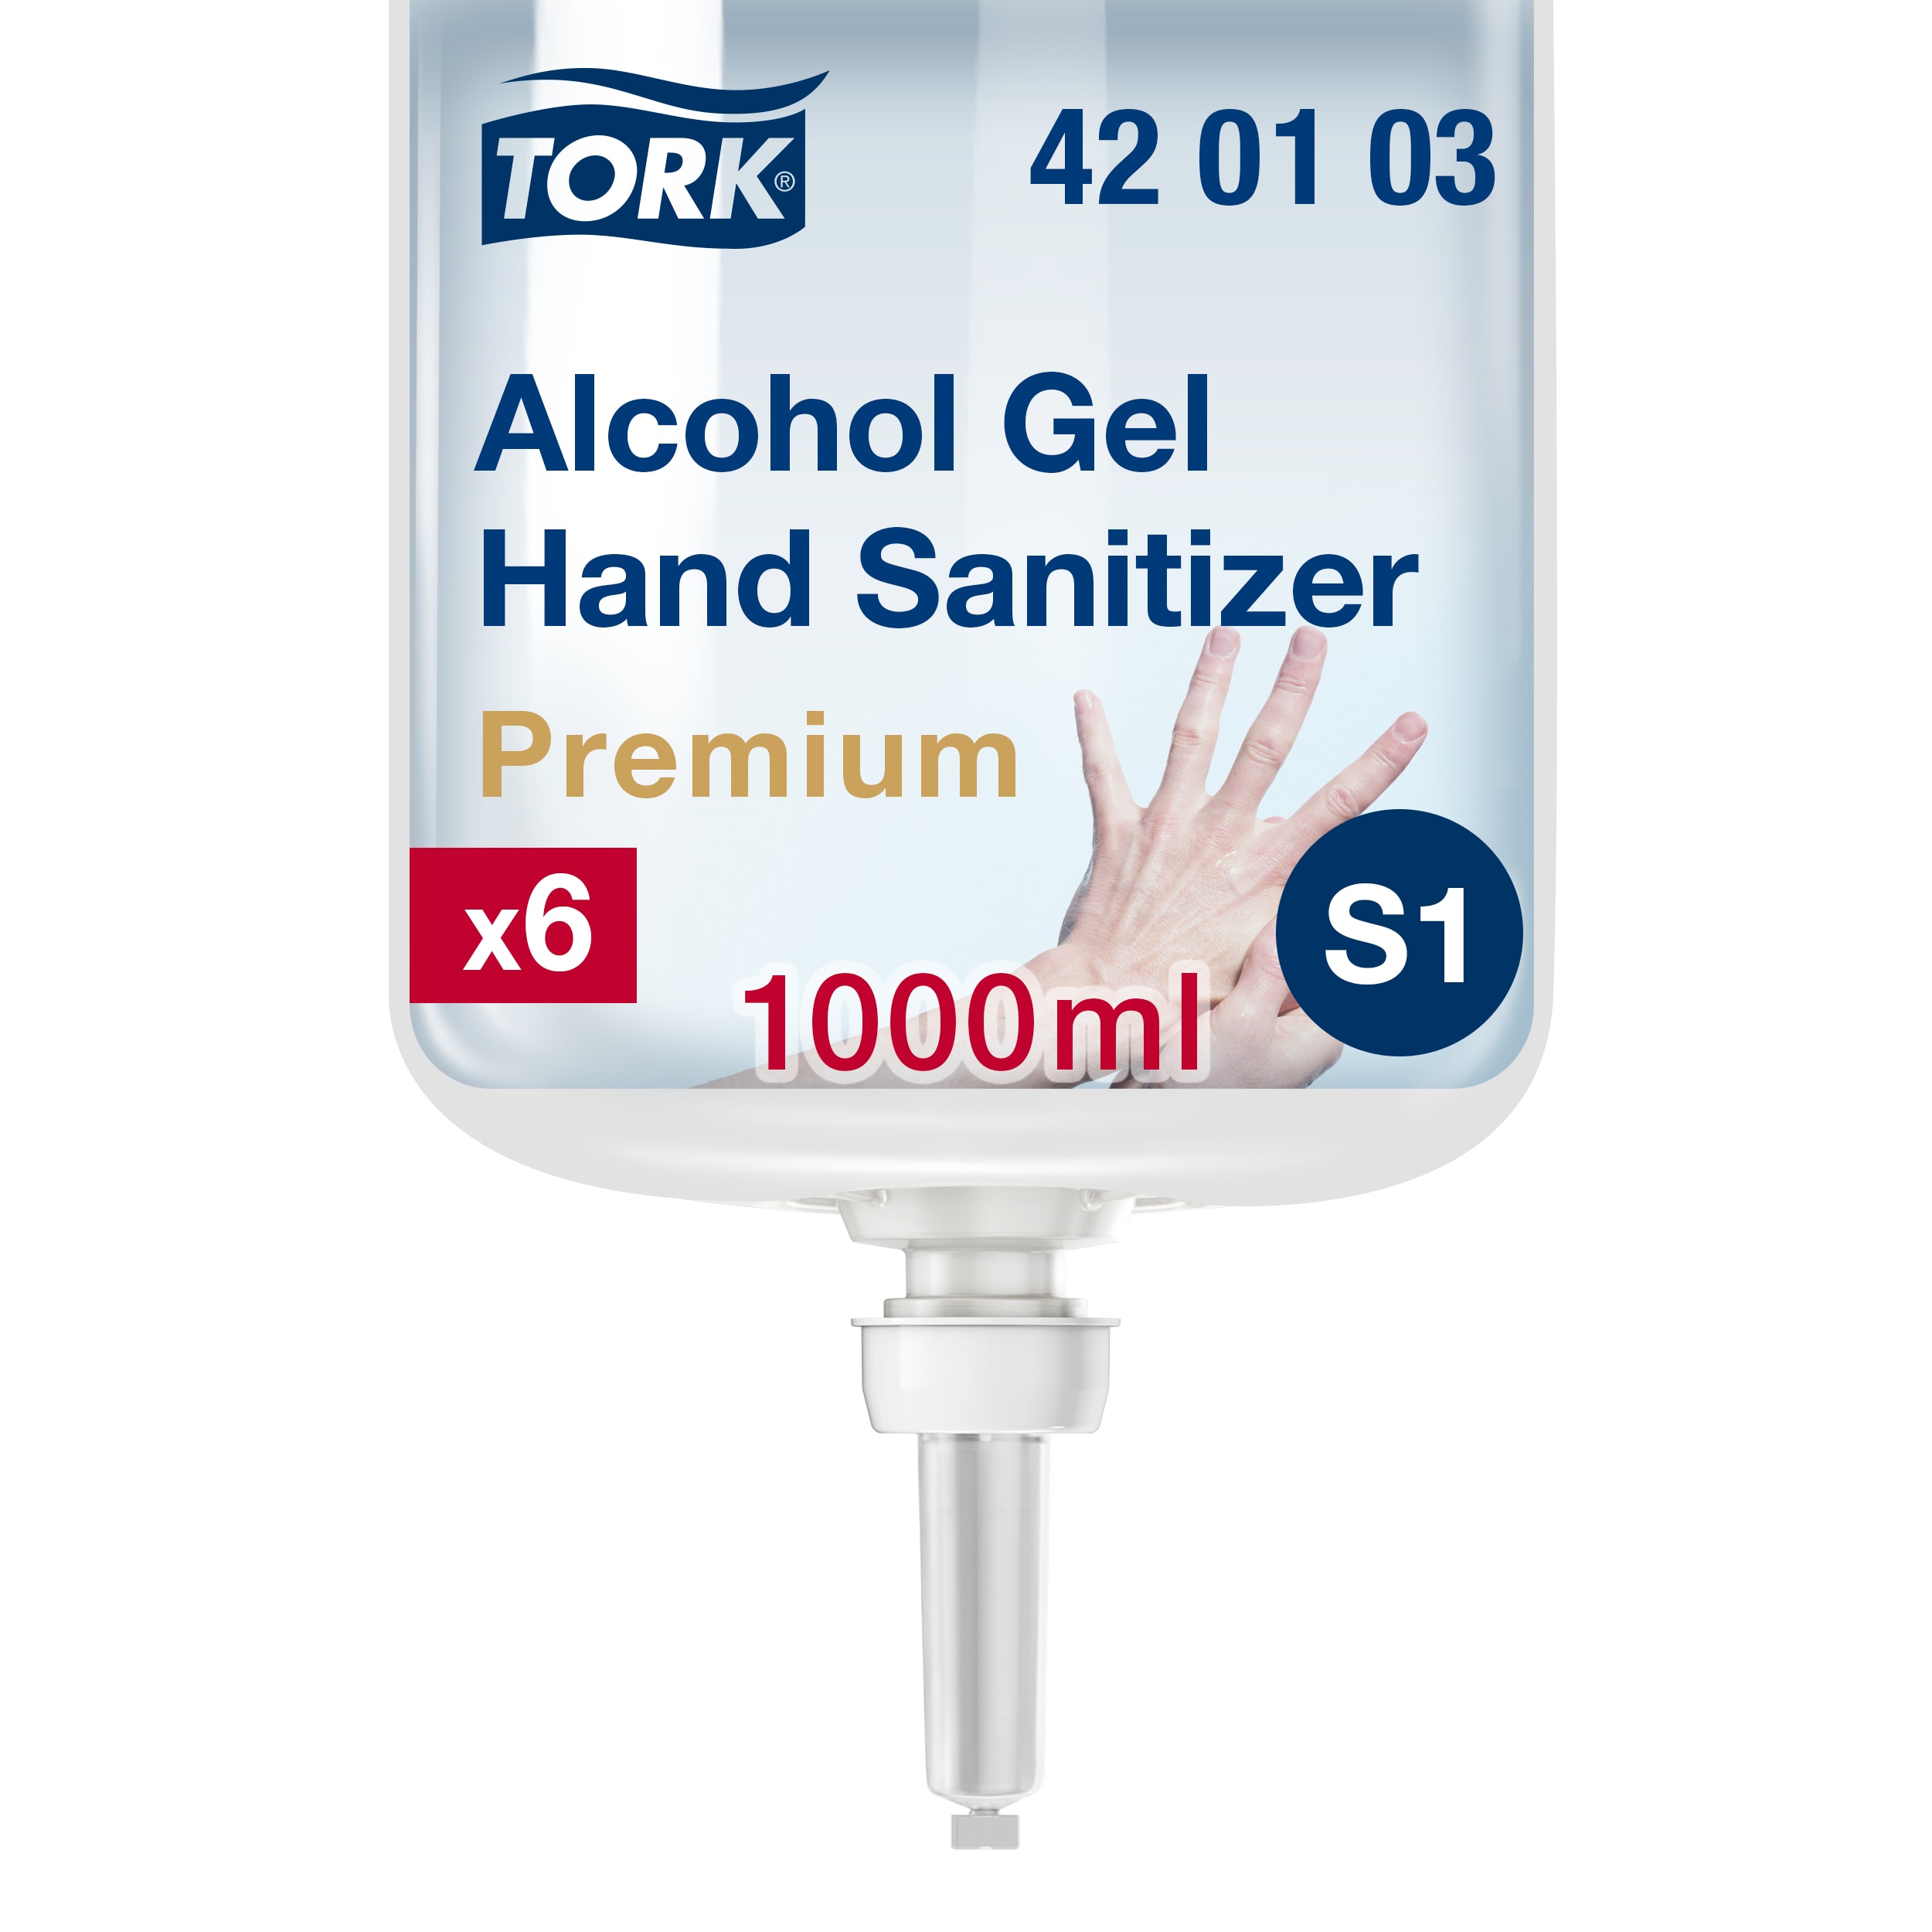 Afbeelding van Ds à 6 fles 1000 ml tork premium alcohol gel